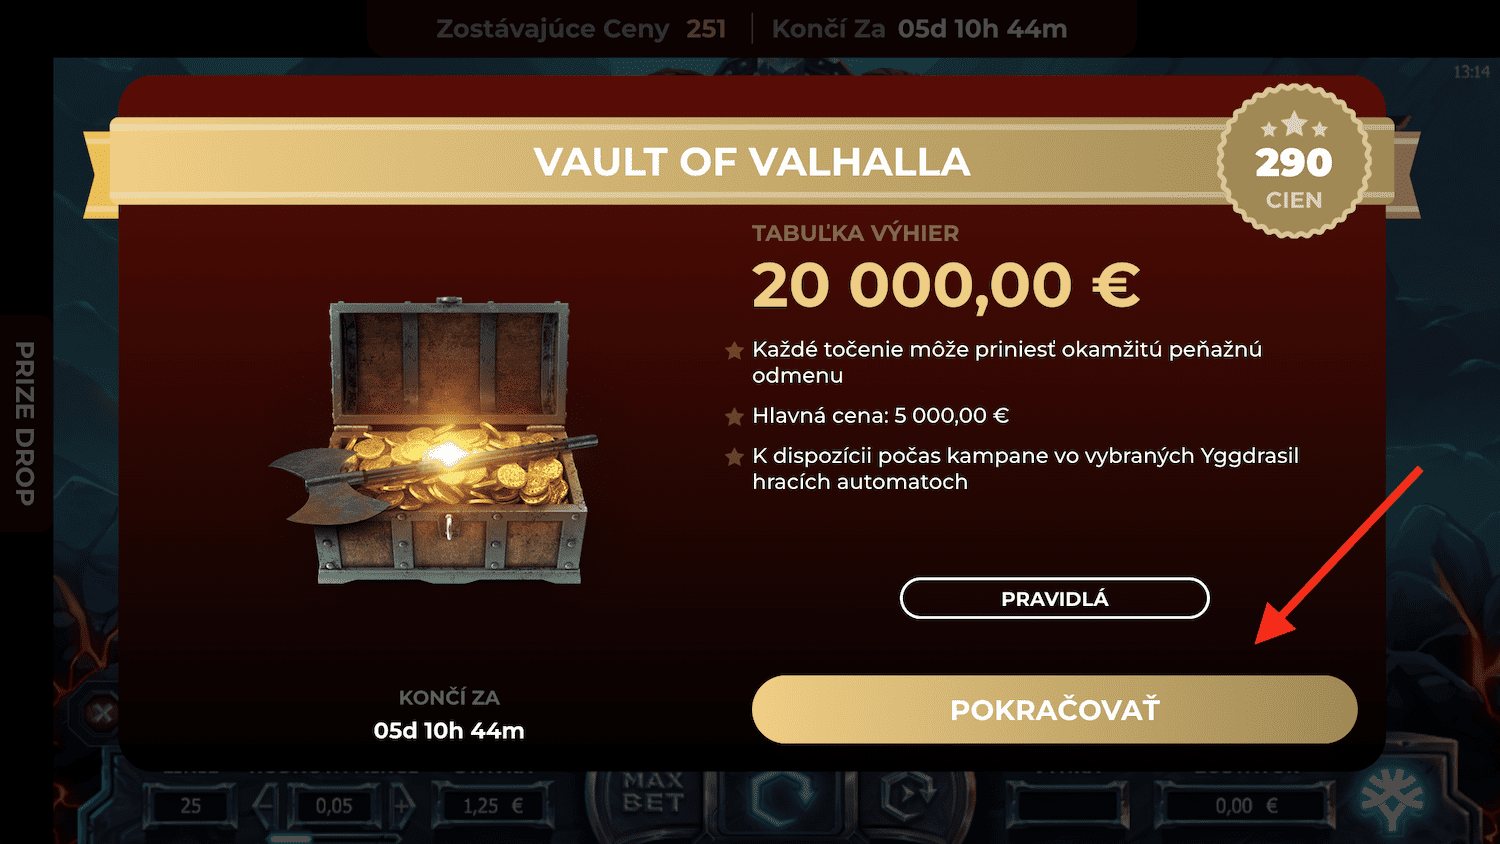 Registrácia do súťaže Vault of Valhalla